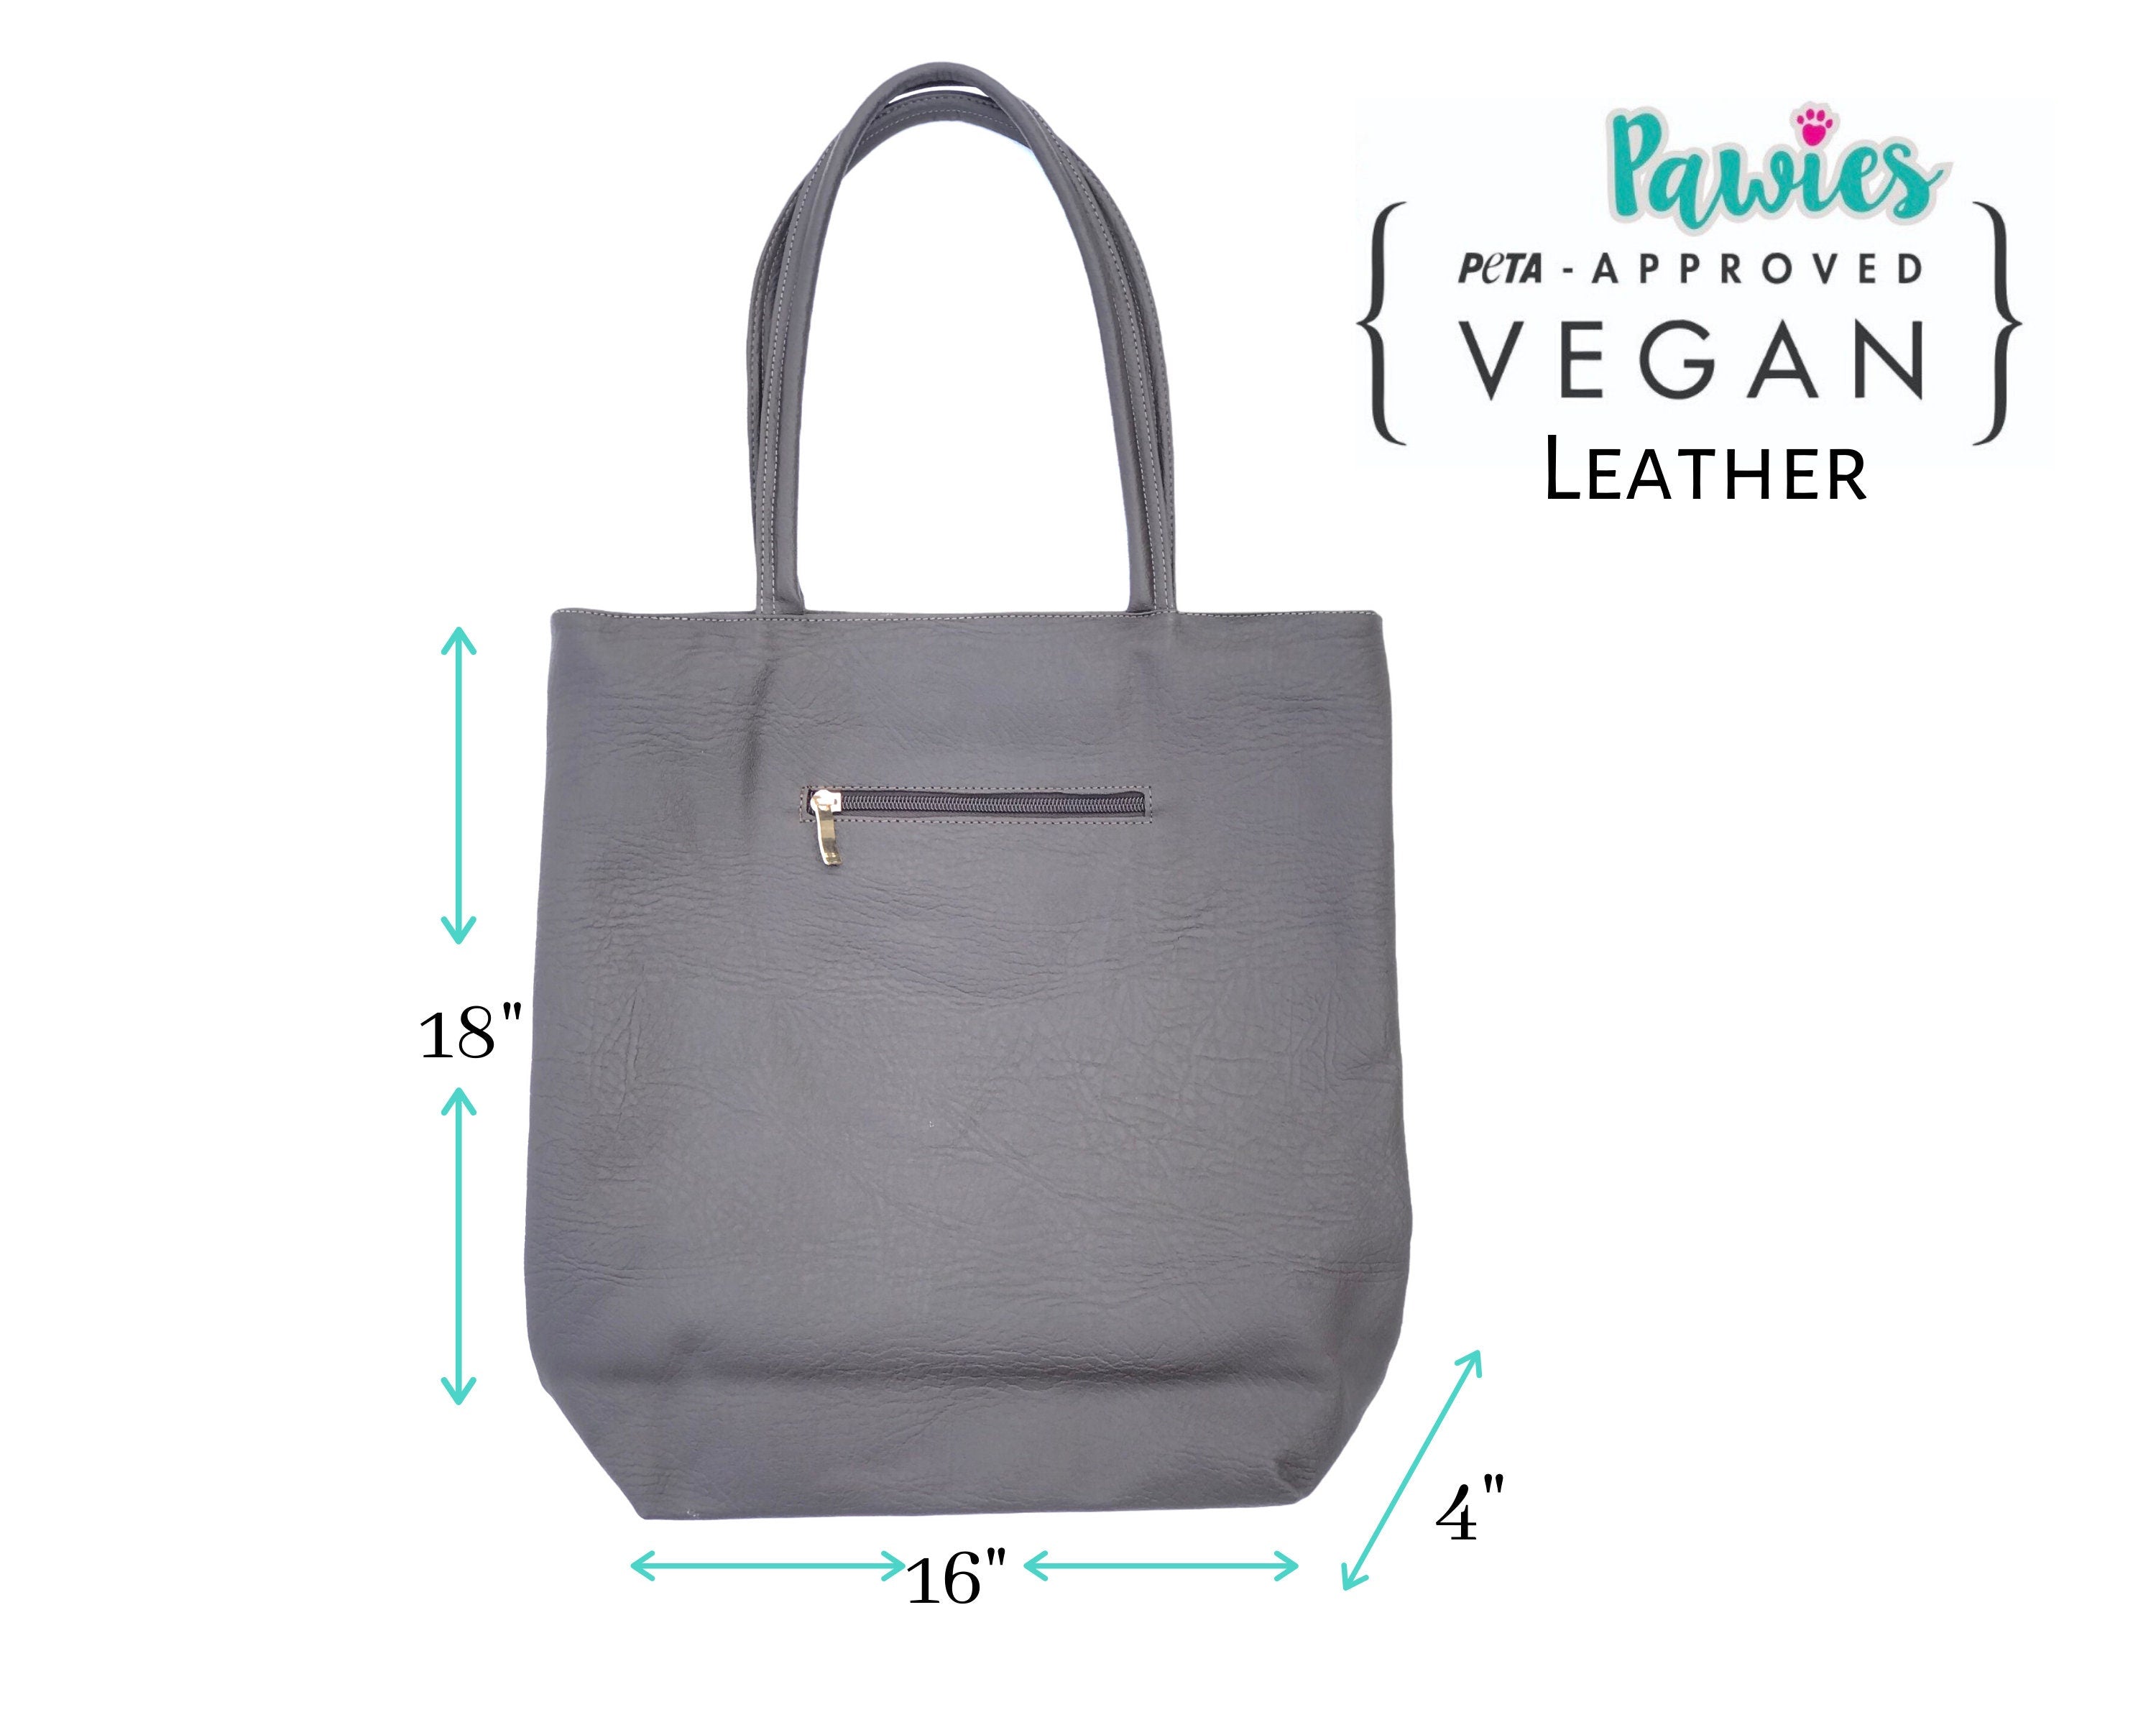 Westie Vegan Leather Tote bag, tote bag, animal lovers, dog lover, pawies, vegan leather, westie, handbag